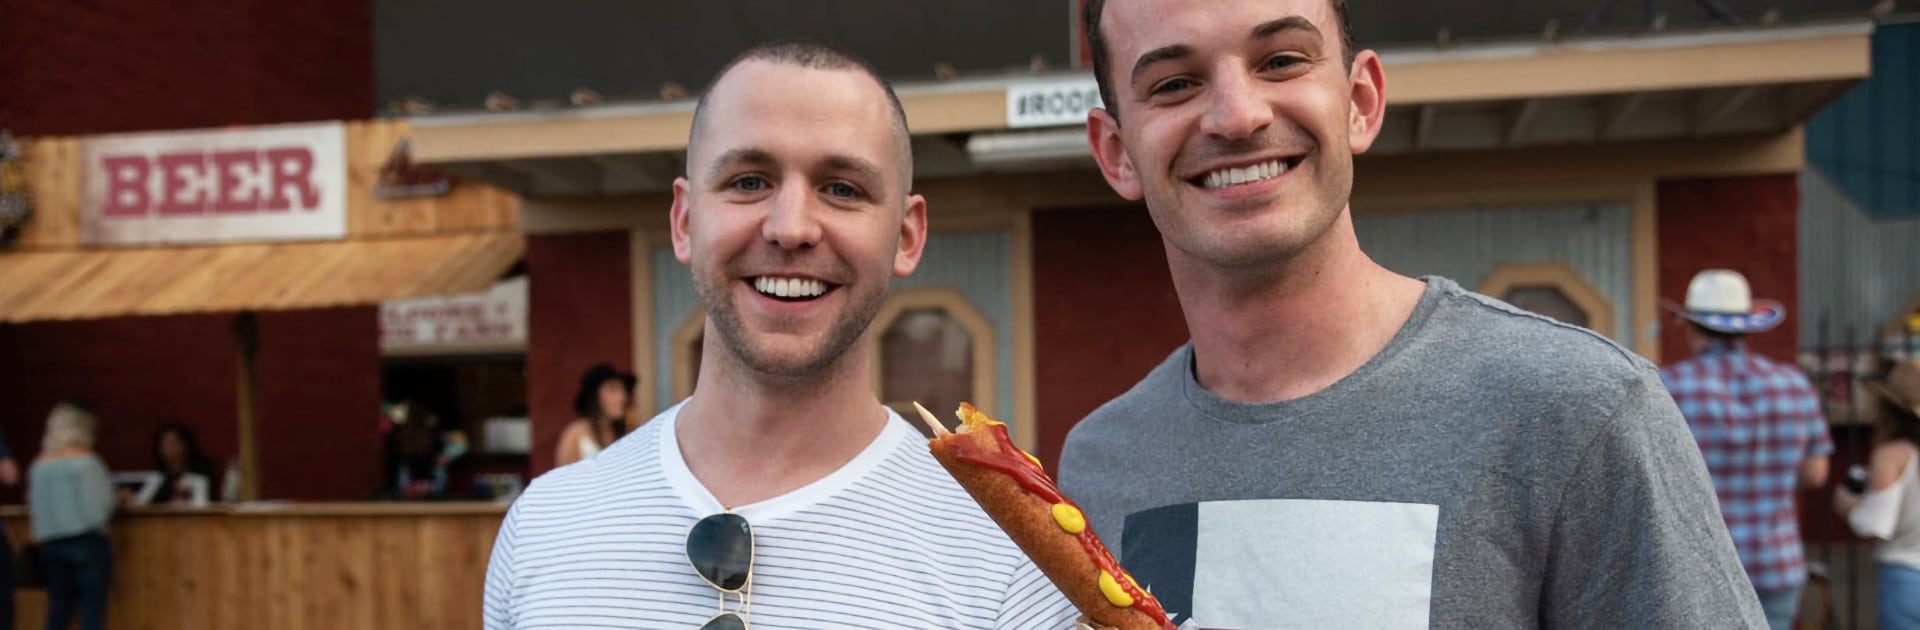 two men enjoying corn dogs